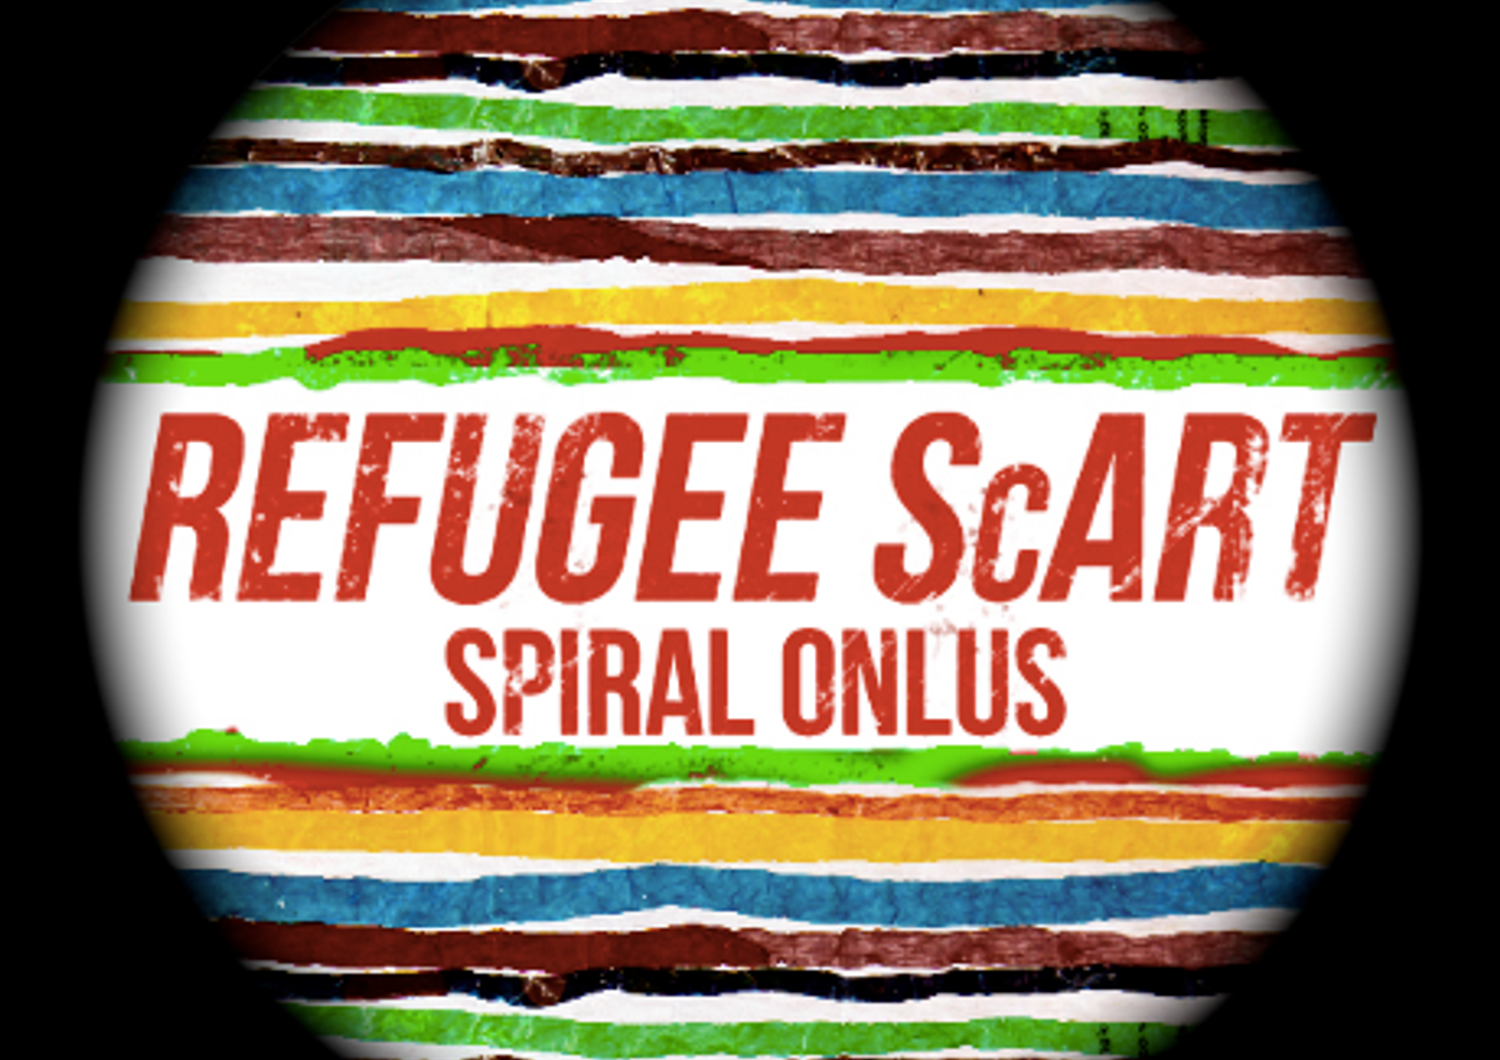 Refugee ScART &ndash; Migrant Art&nbsp;